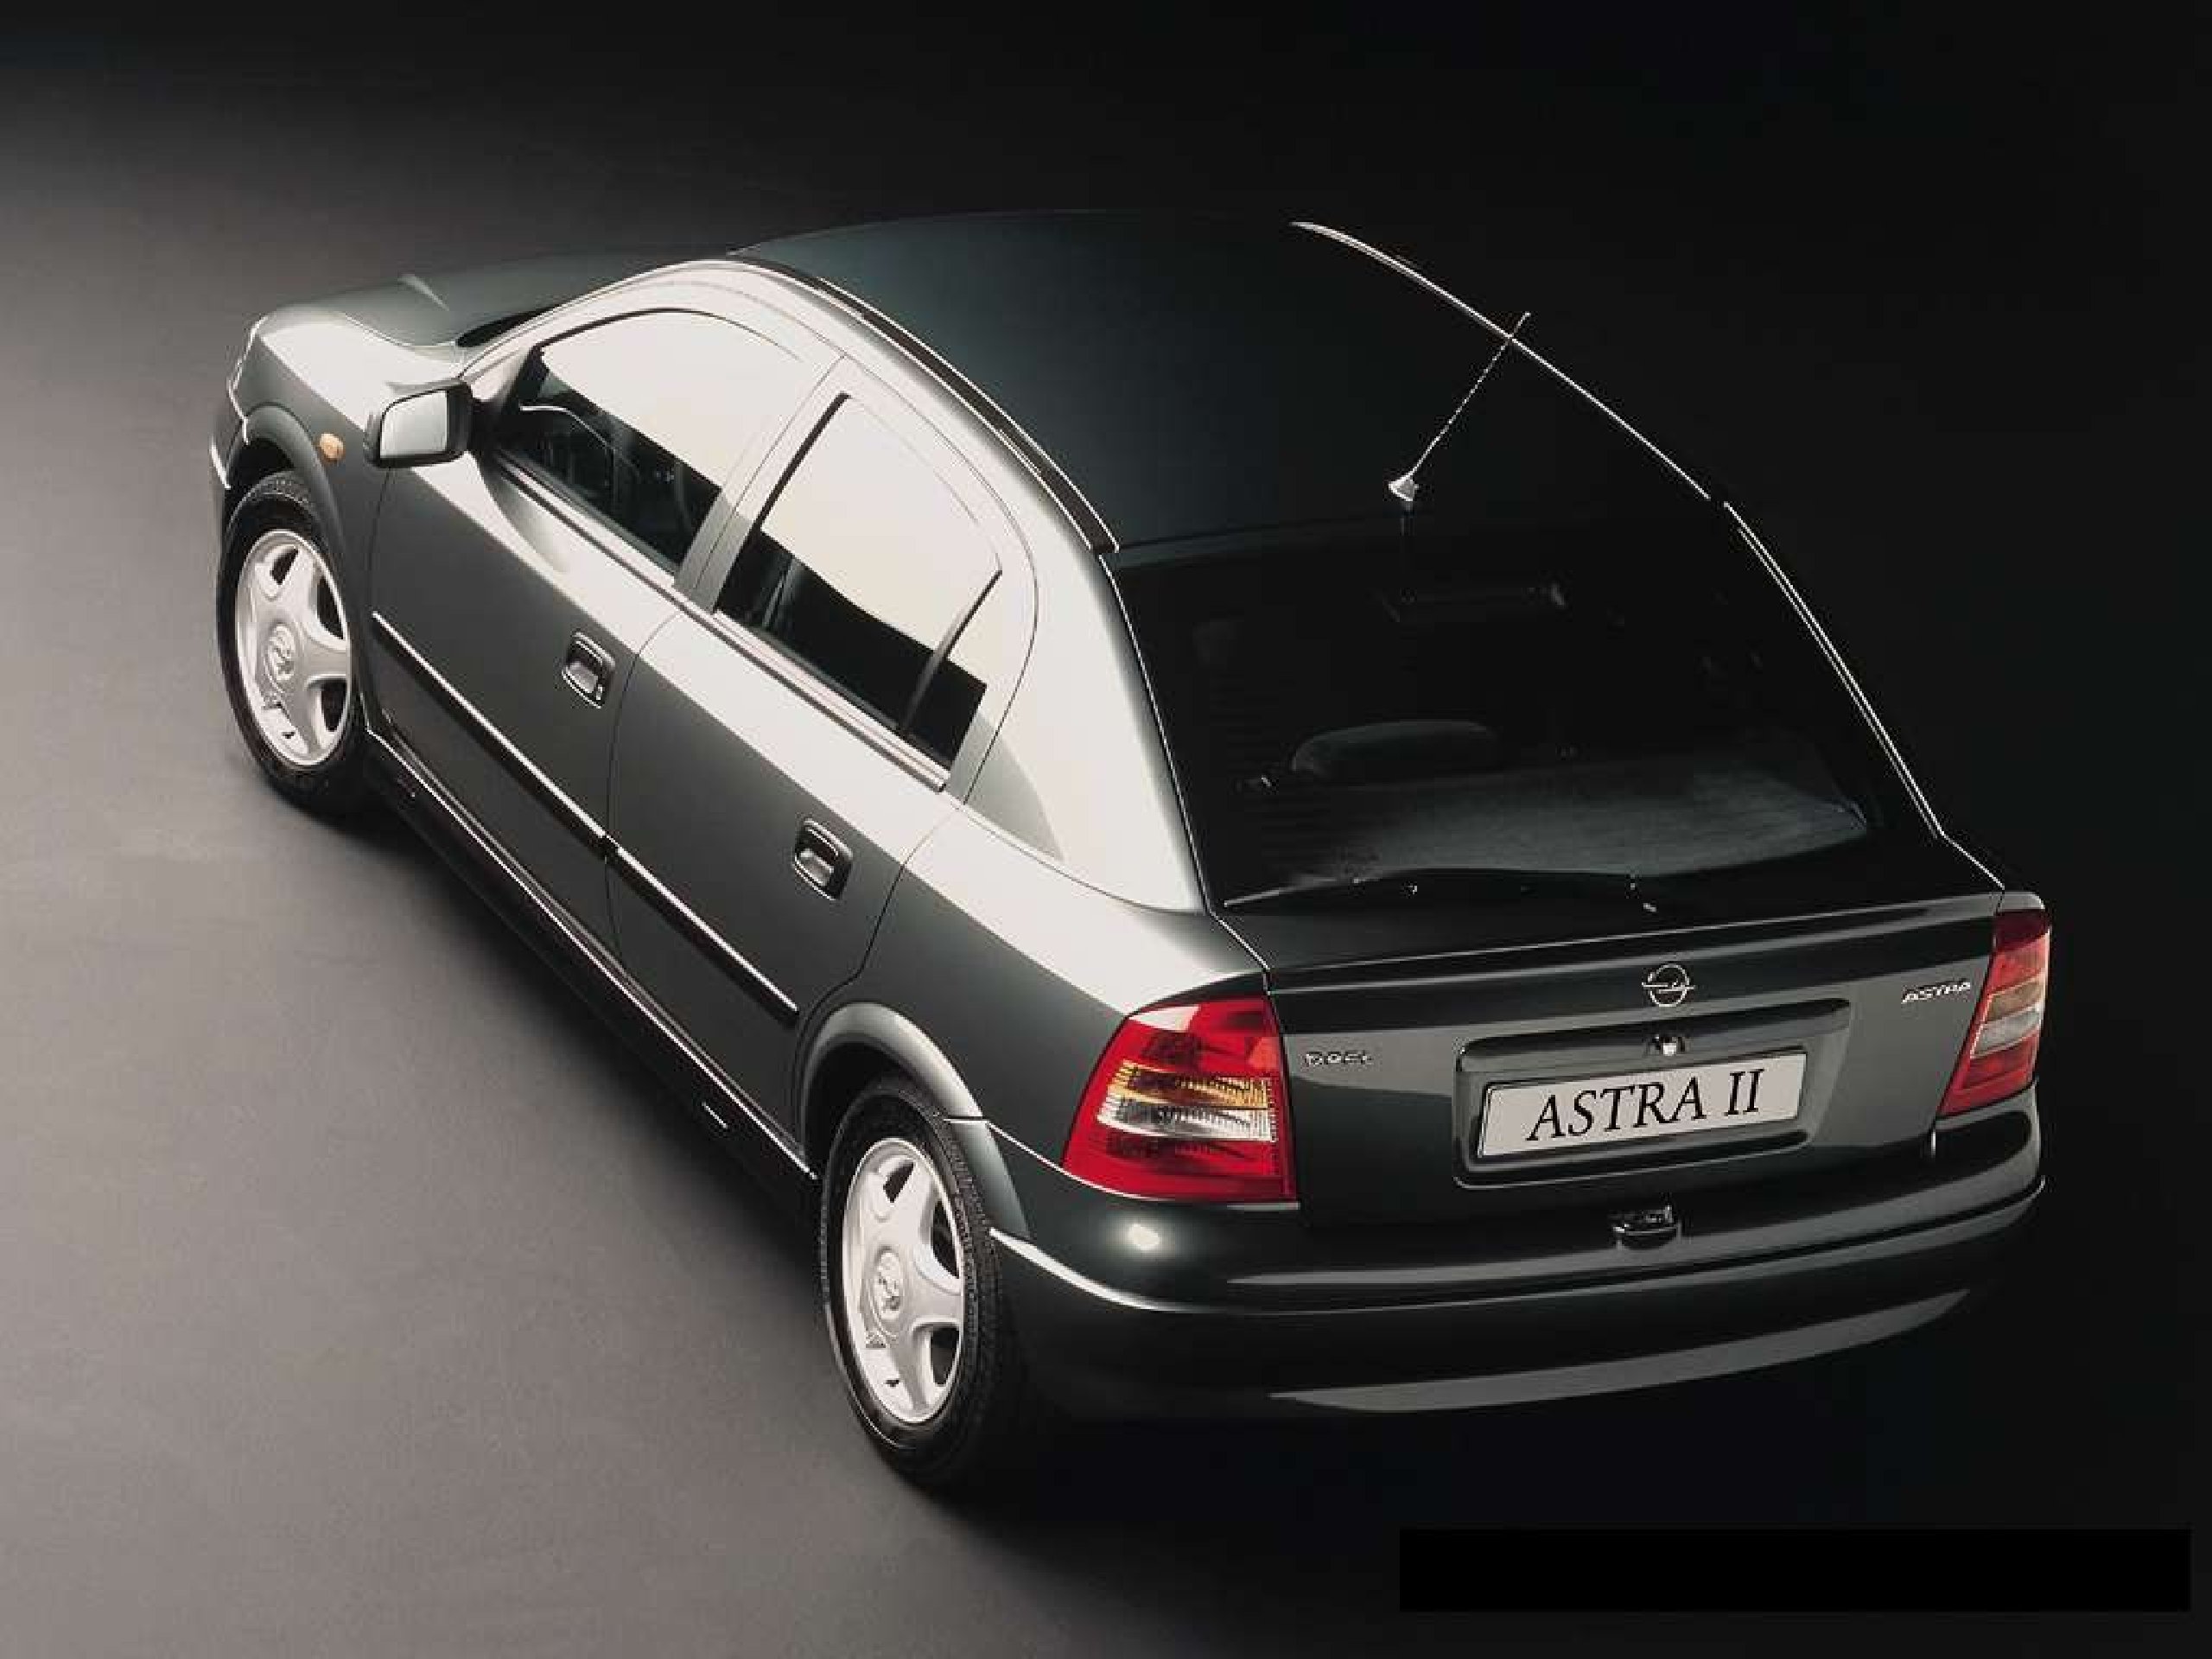 Джи караван. Opel Astra g 1998-2004. Opel Astra g седан 1998-2004. Opel Astra g 2004. Opel Astra g 2004 1.6.